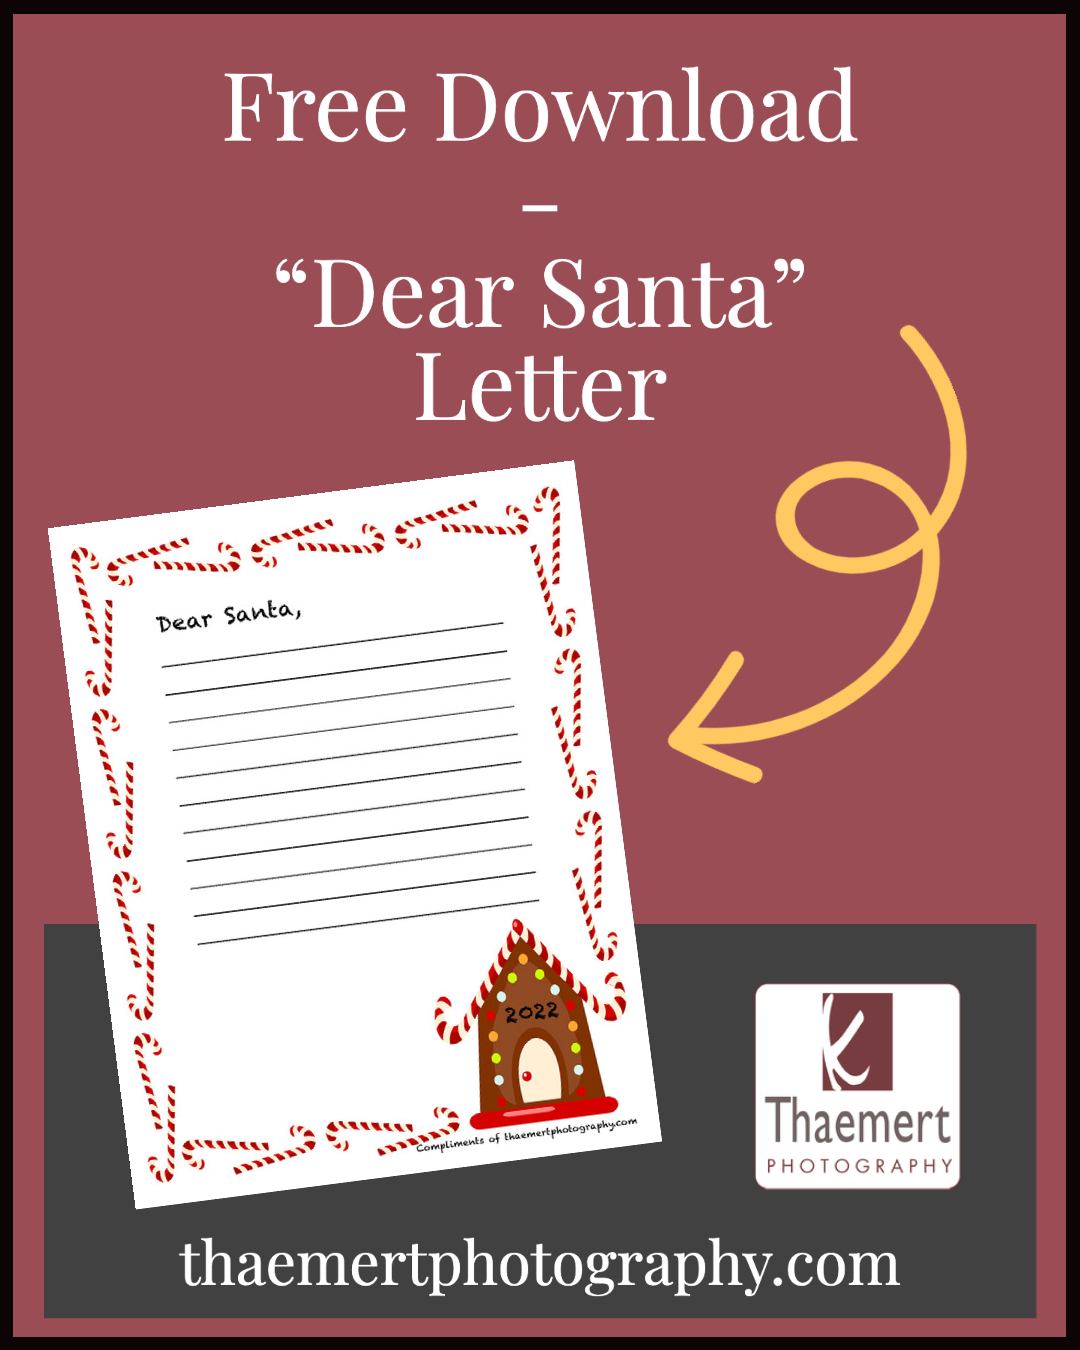 Download a Dear Santa Letter Today